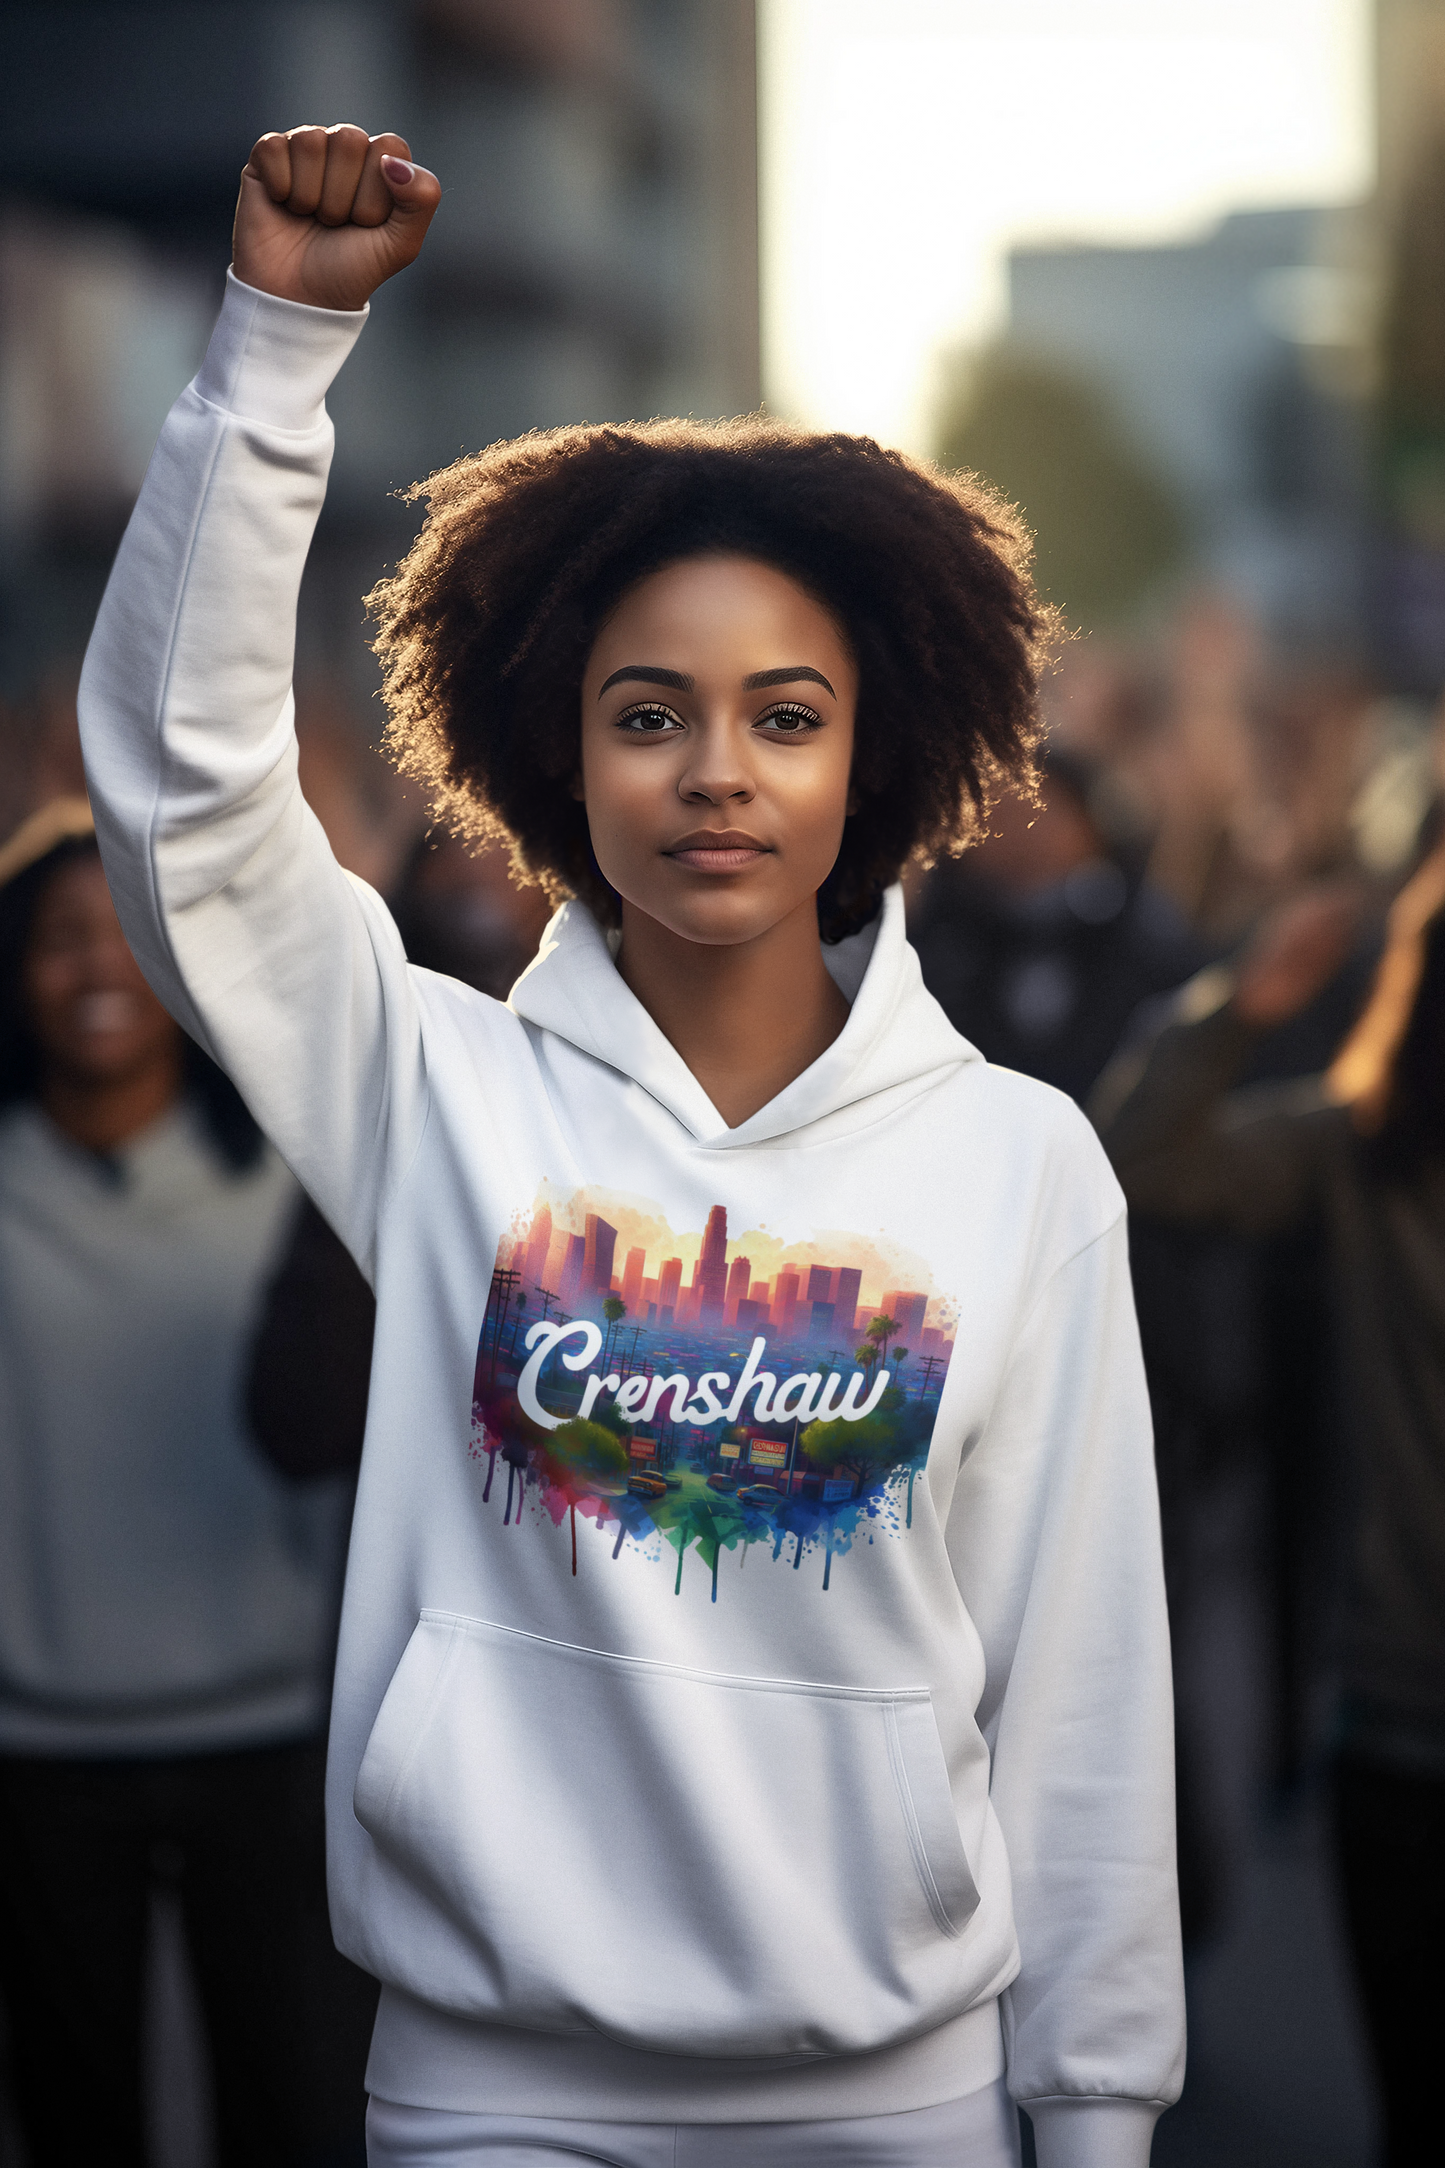 CRENSHAW ONE Hooded Sweatshirt, Back in the Day, African American Culture, Black History, Iconic Black Neighborhood, Graphic Sweatshirt, Urban Streetwear